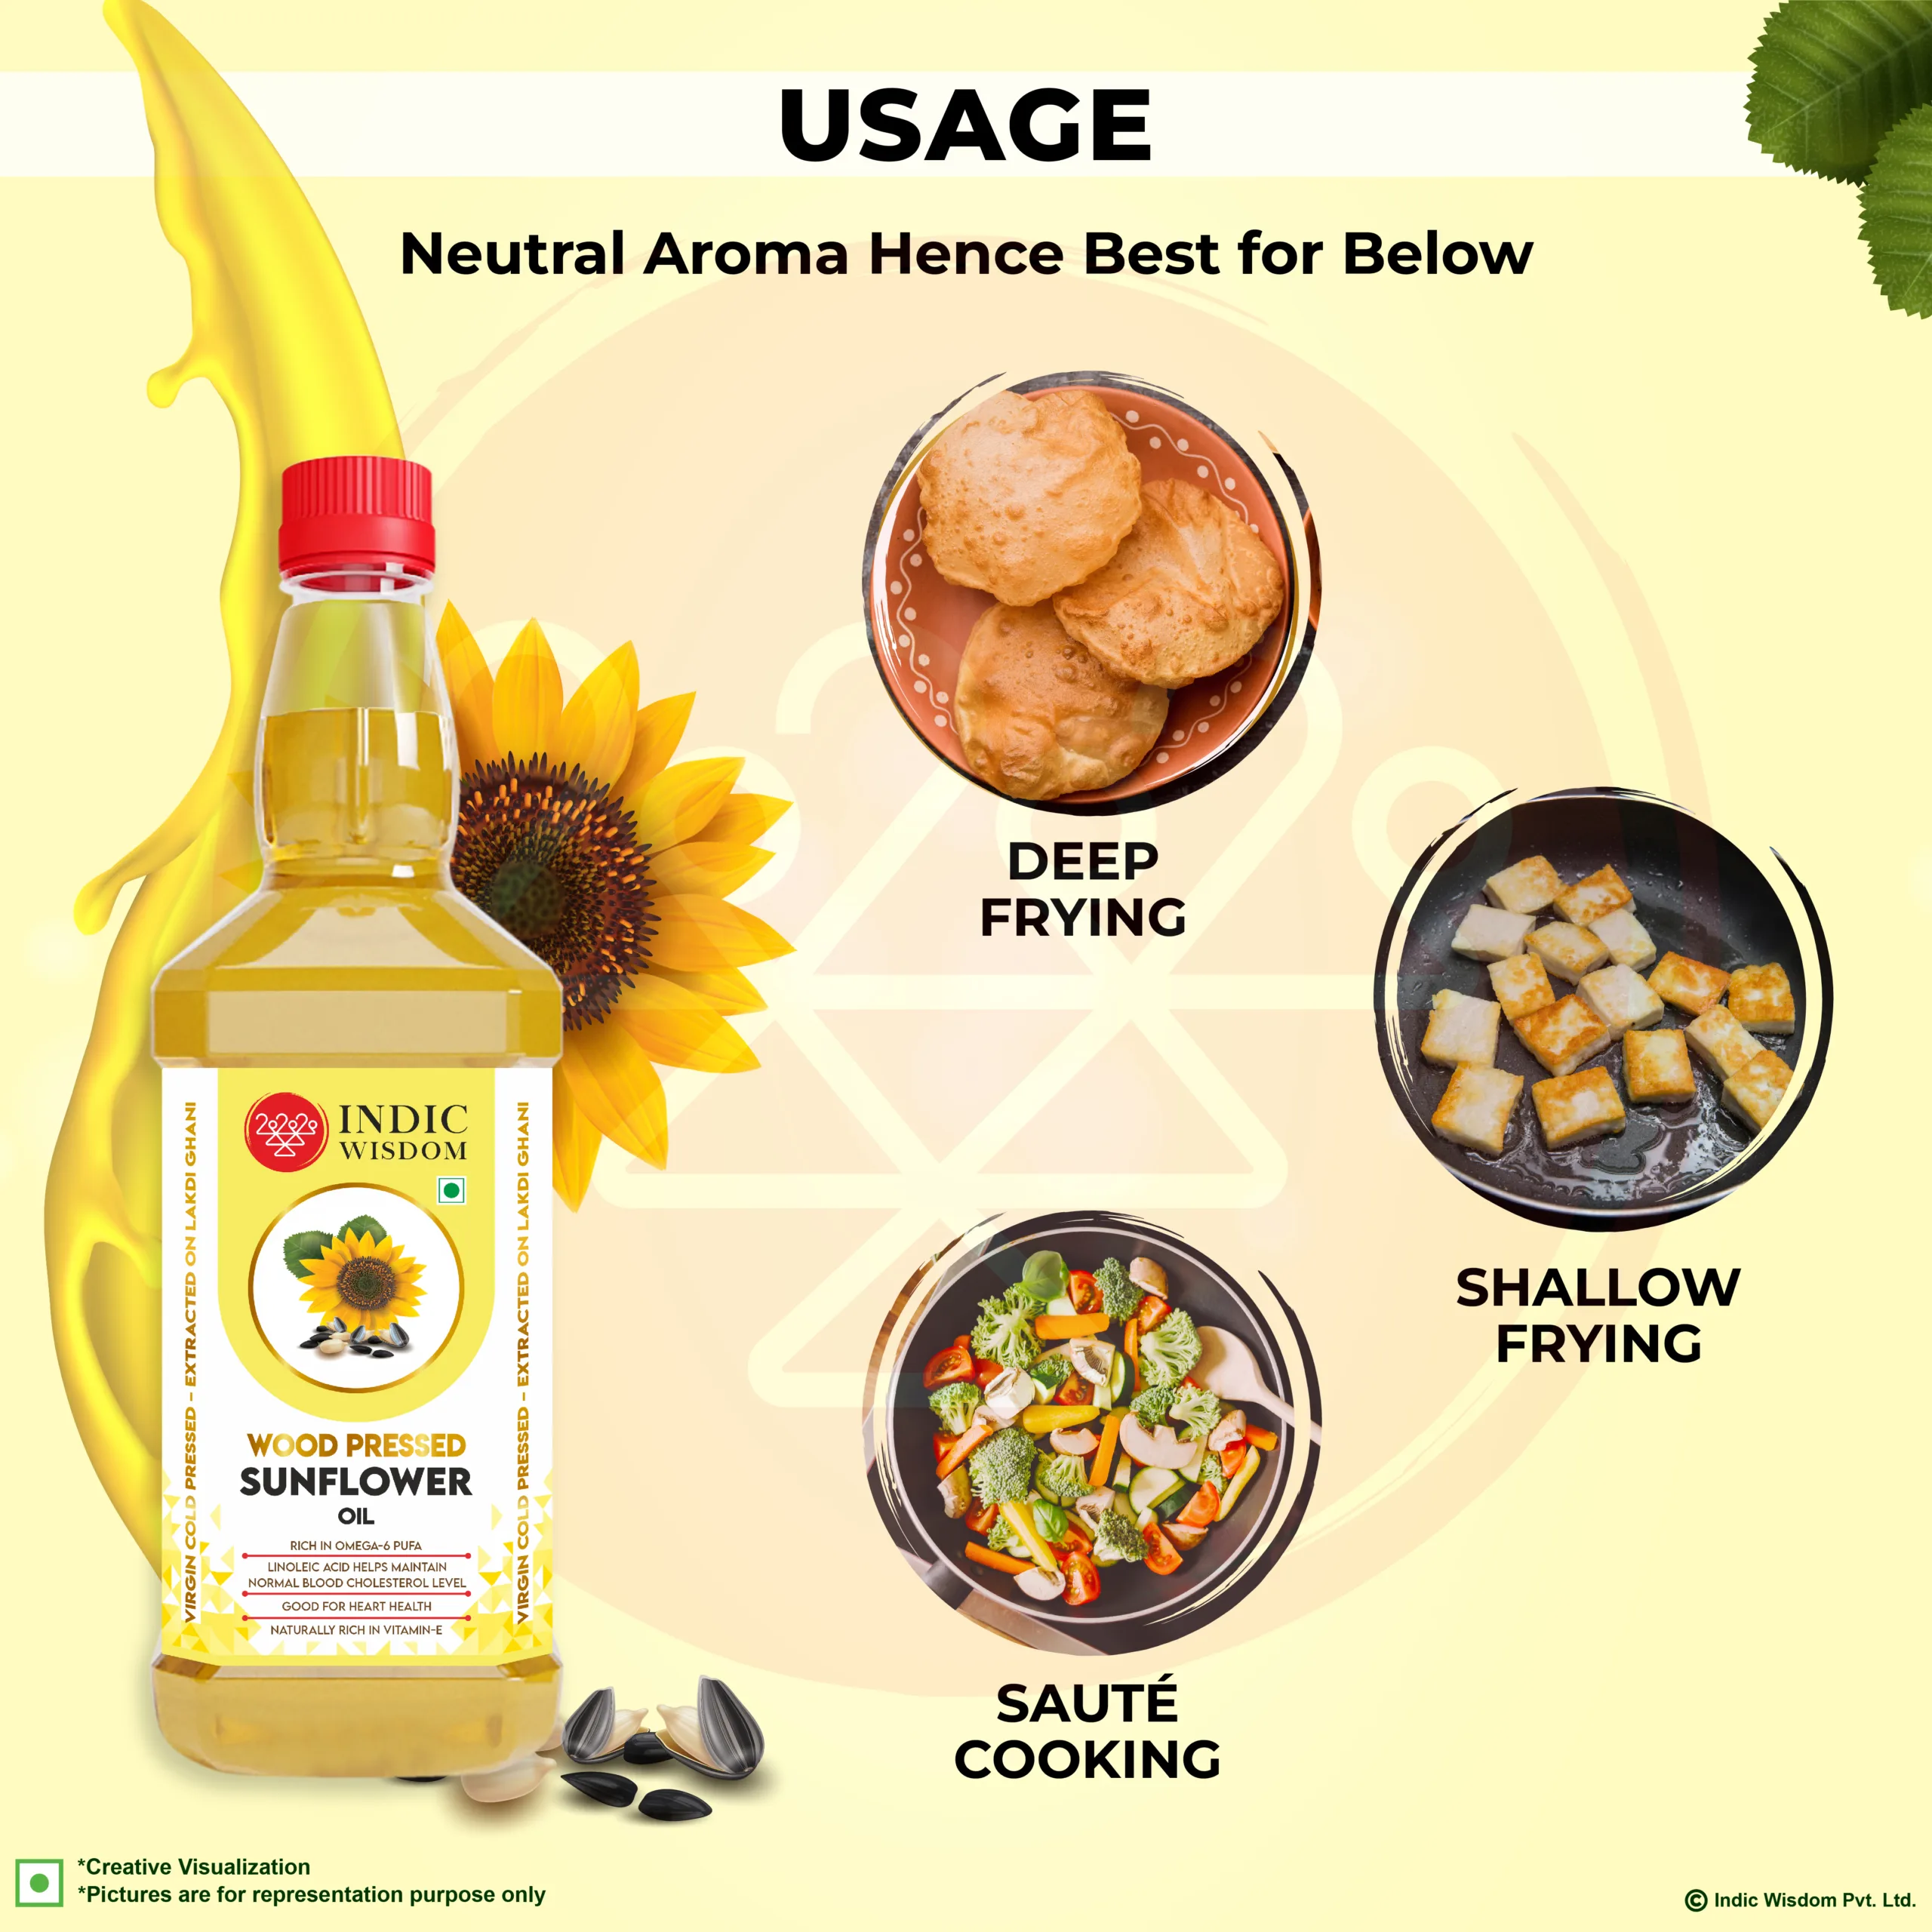 Usage of wood pressed sunflower oil